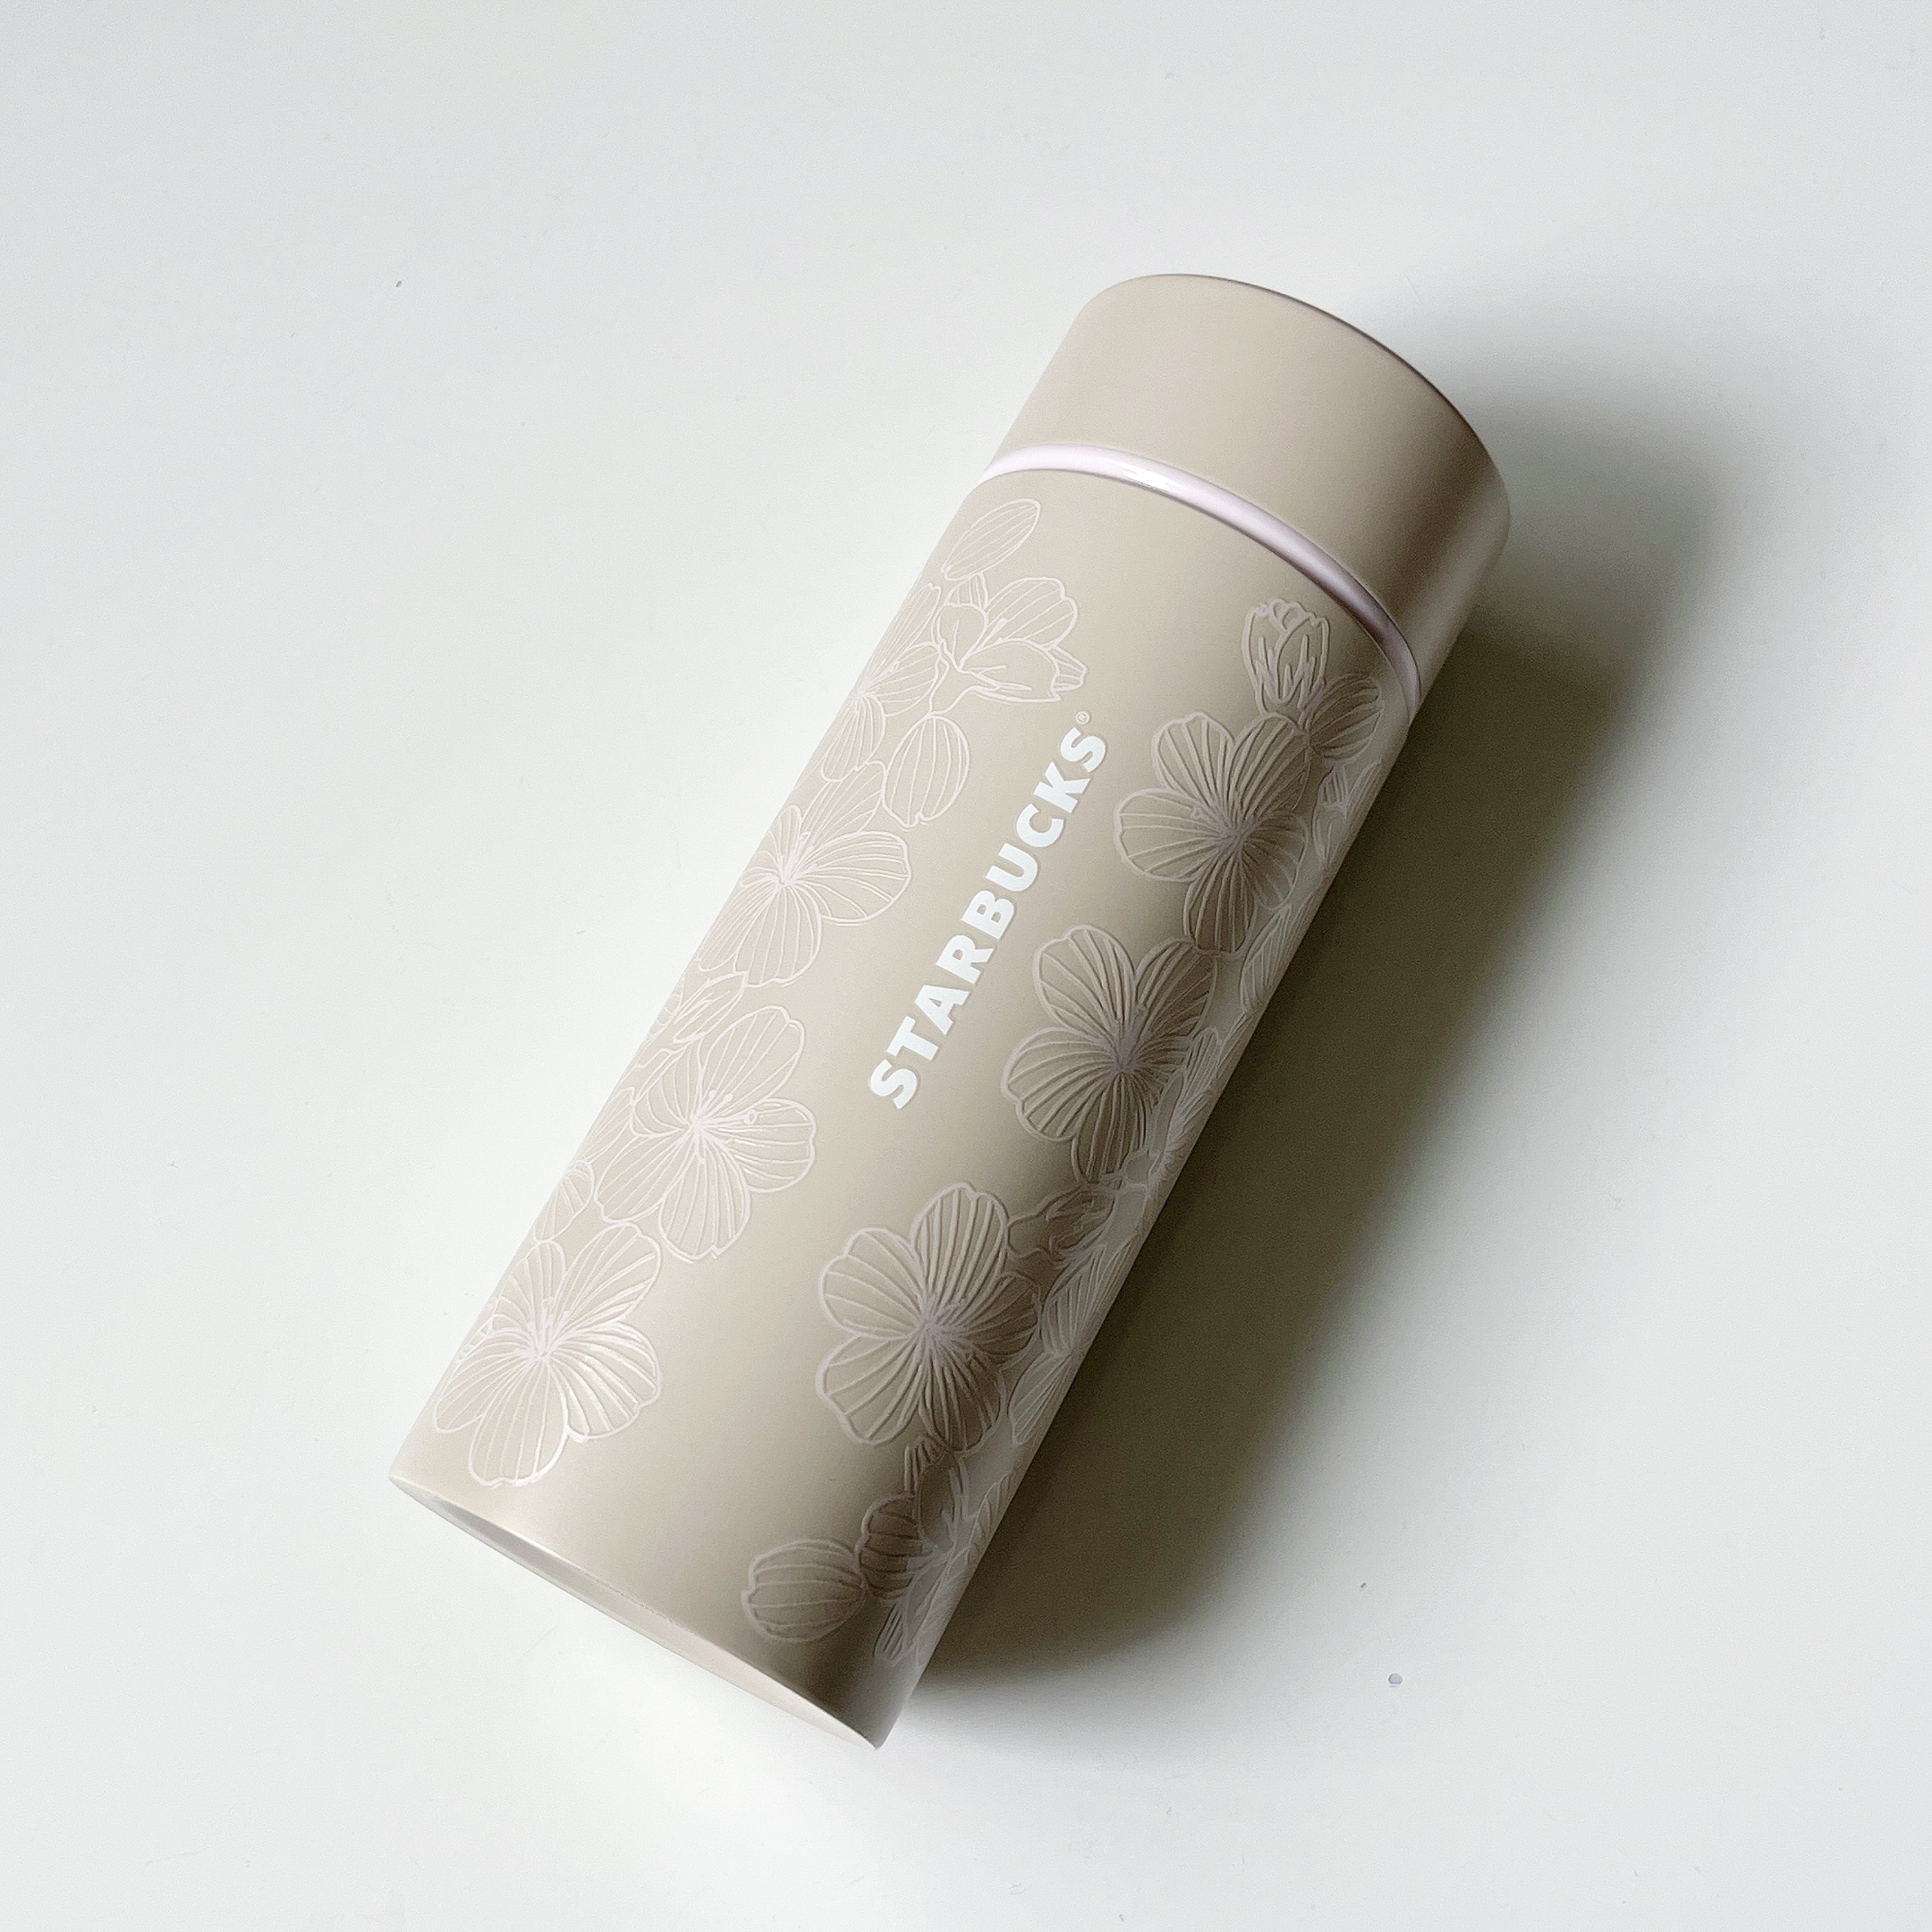 Starbucks Coffee（スターバックスコーヒー）のおすすめボトル「SAKURA2024ステンレスボトルグレースベージュ355ml」